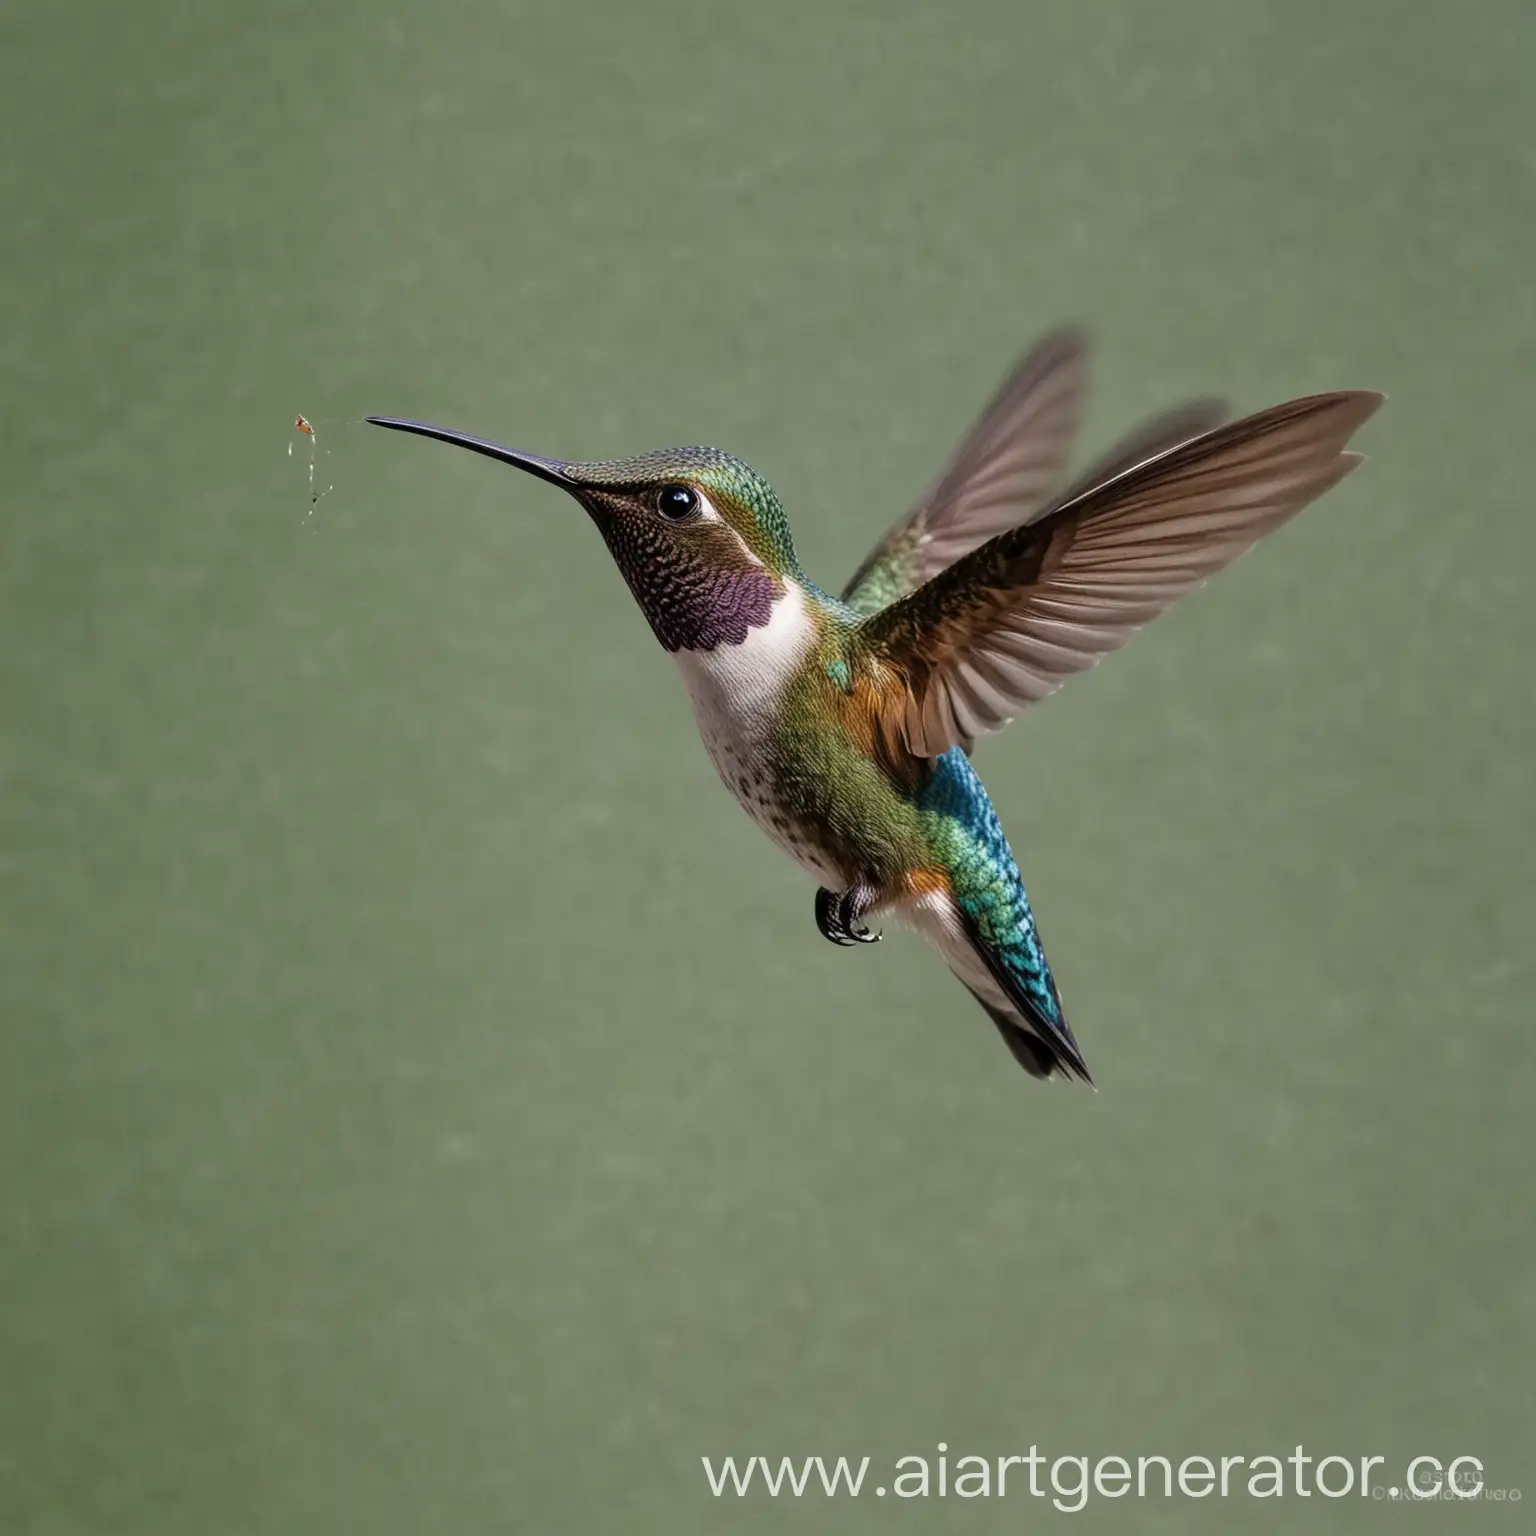 Hummingbird-in-Flight-Graceful-Bird-Soaring-with-Elegance